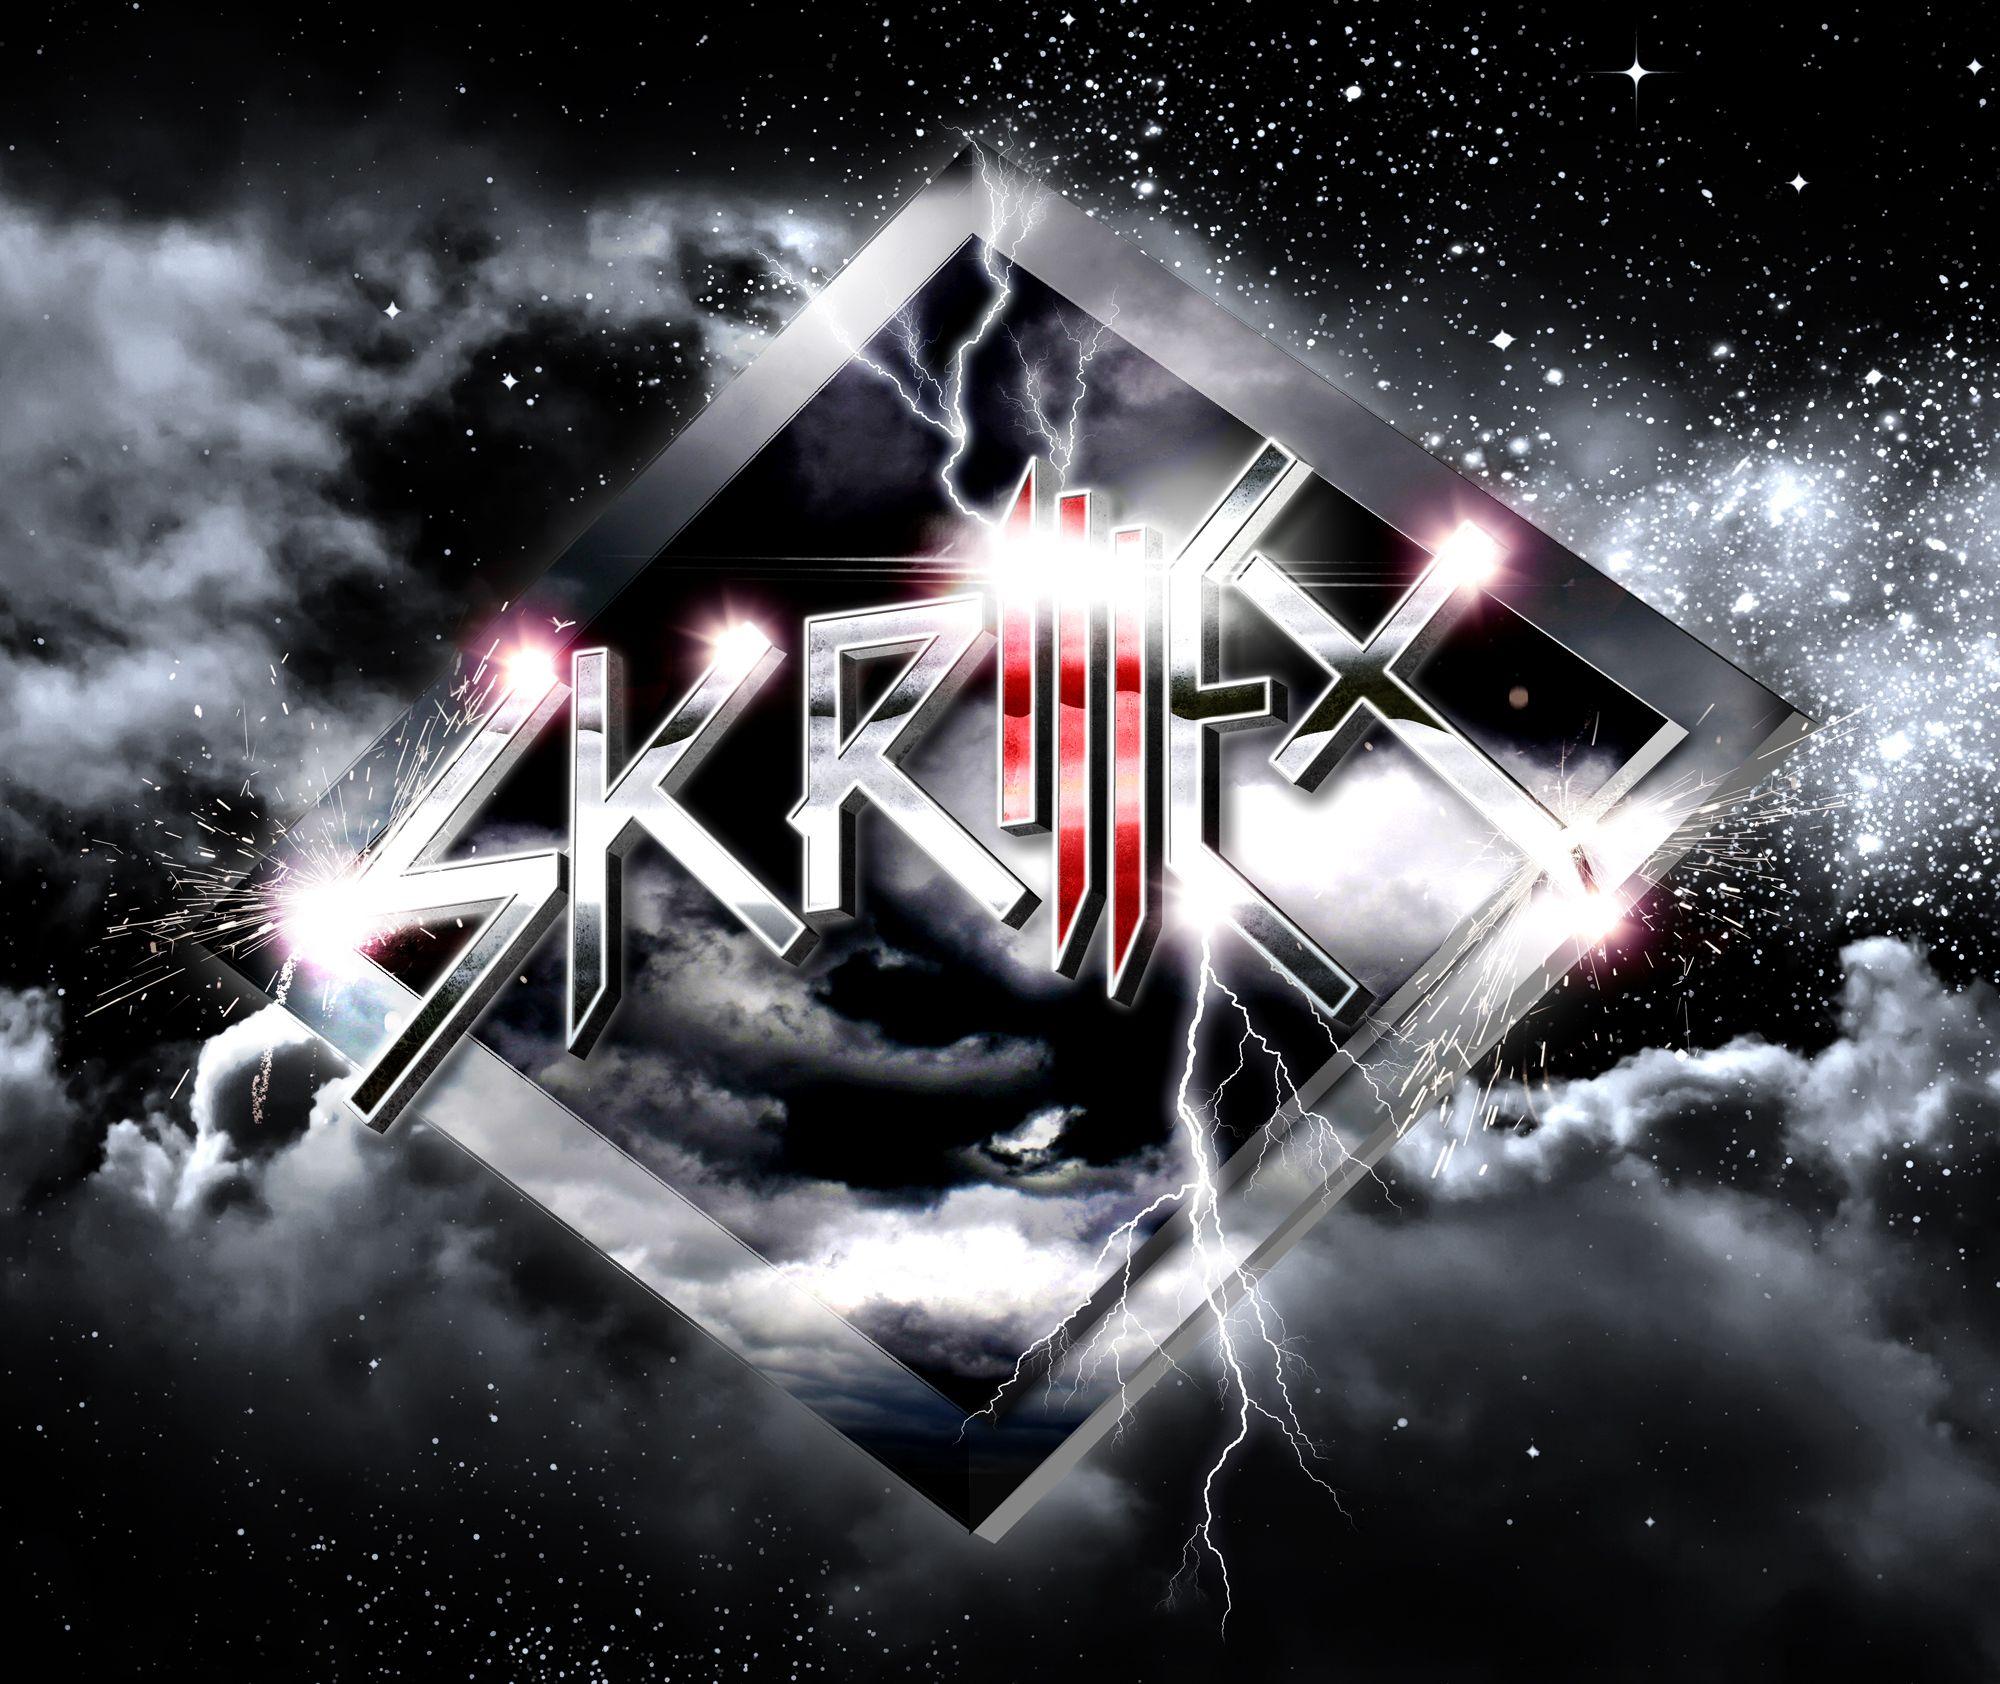 Skrillex Logo - Image - Skrillex Logo.jpg | Really Cool Things Wiki | FANDOM powered ...